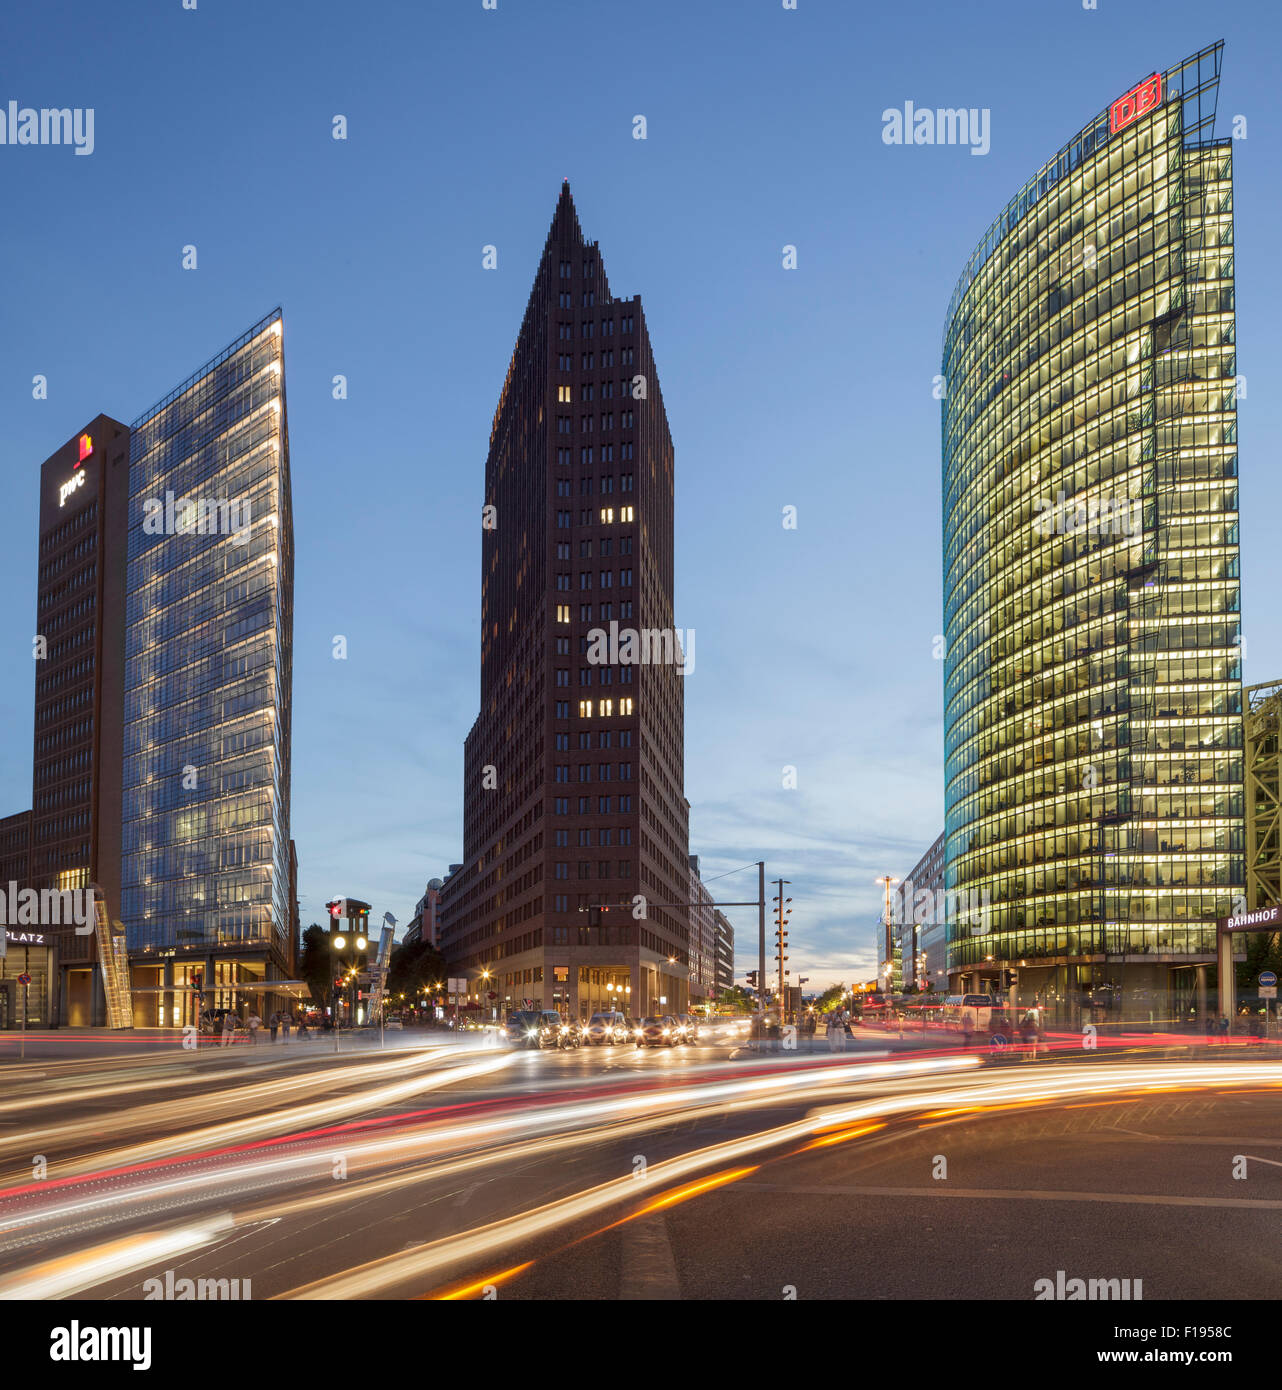 Potsdamer Platz, con Potsdamer Platz 11 da Renzo Piano, Kollhoff Tower e il DB Bahn Tower, Berlino, Germania Foto Stock